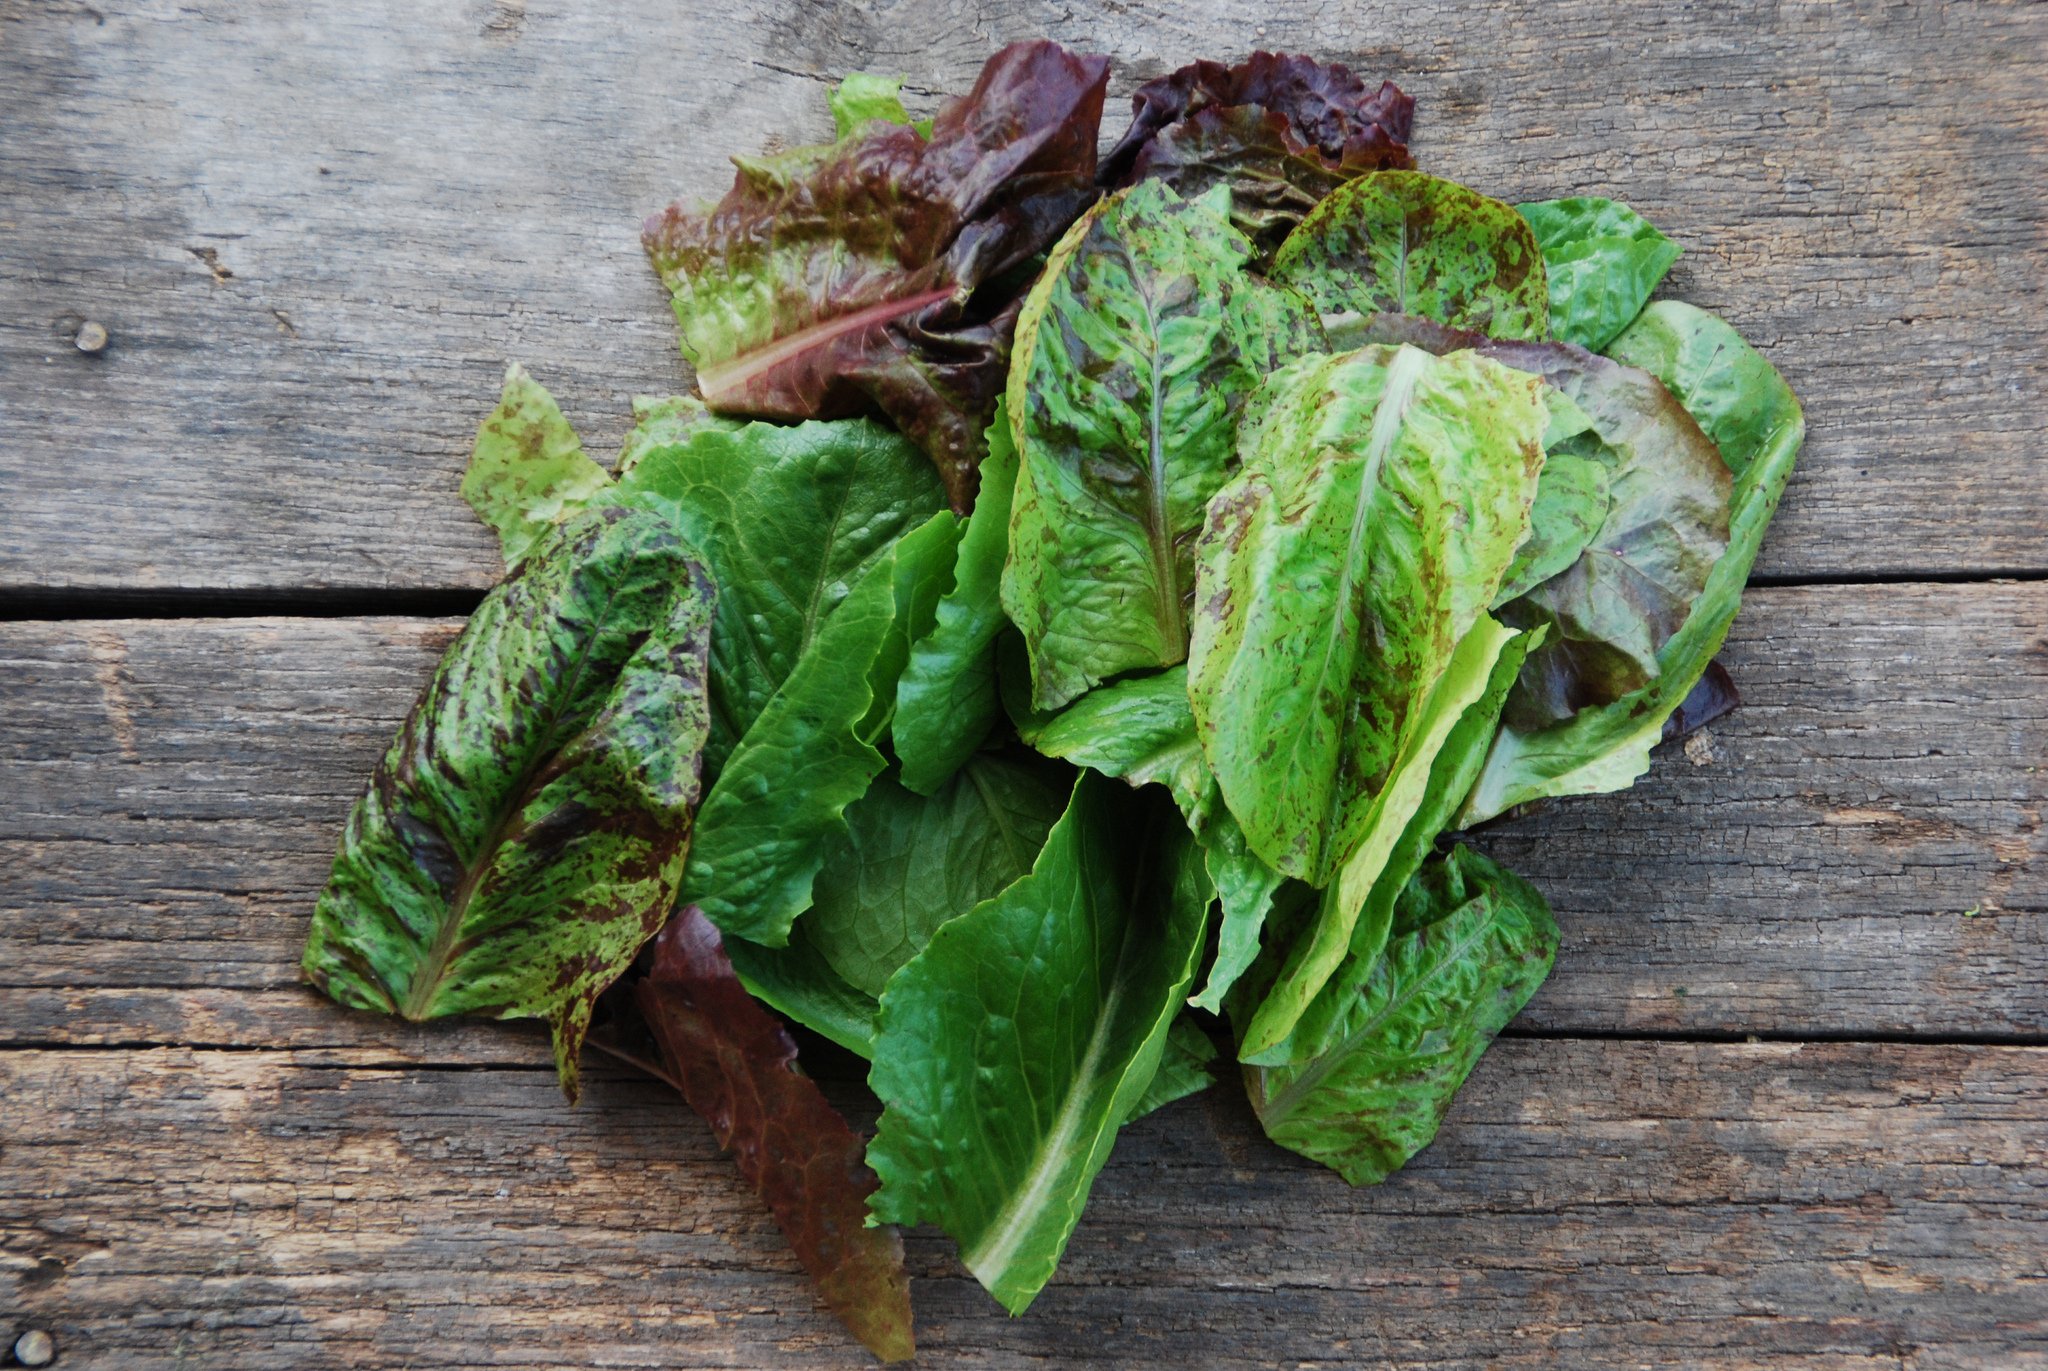 Mixed Salad Greens image by Suzie's Farm via Flickr